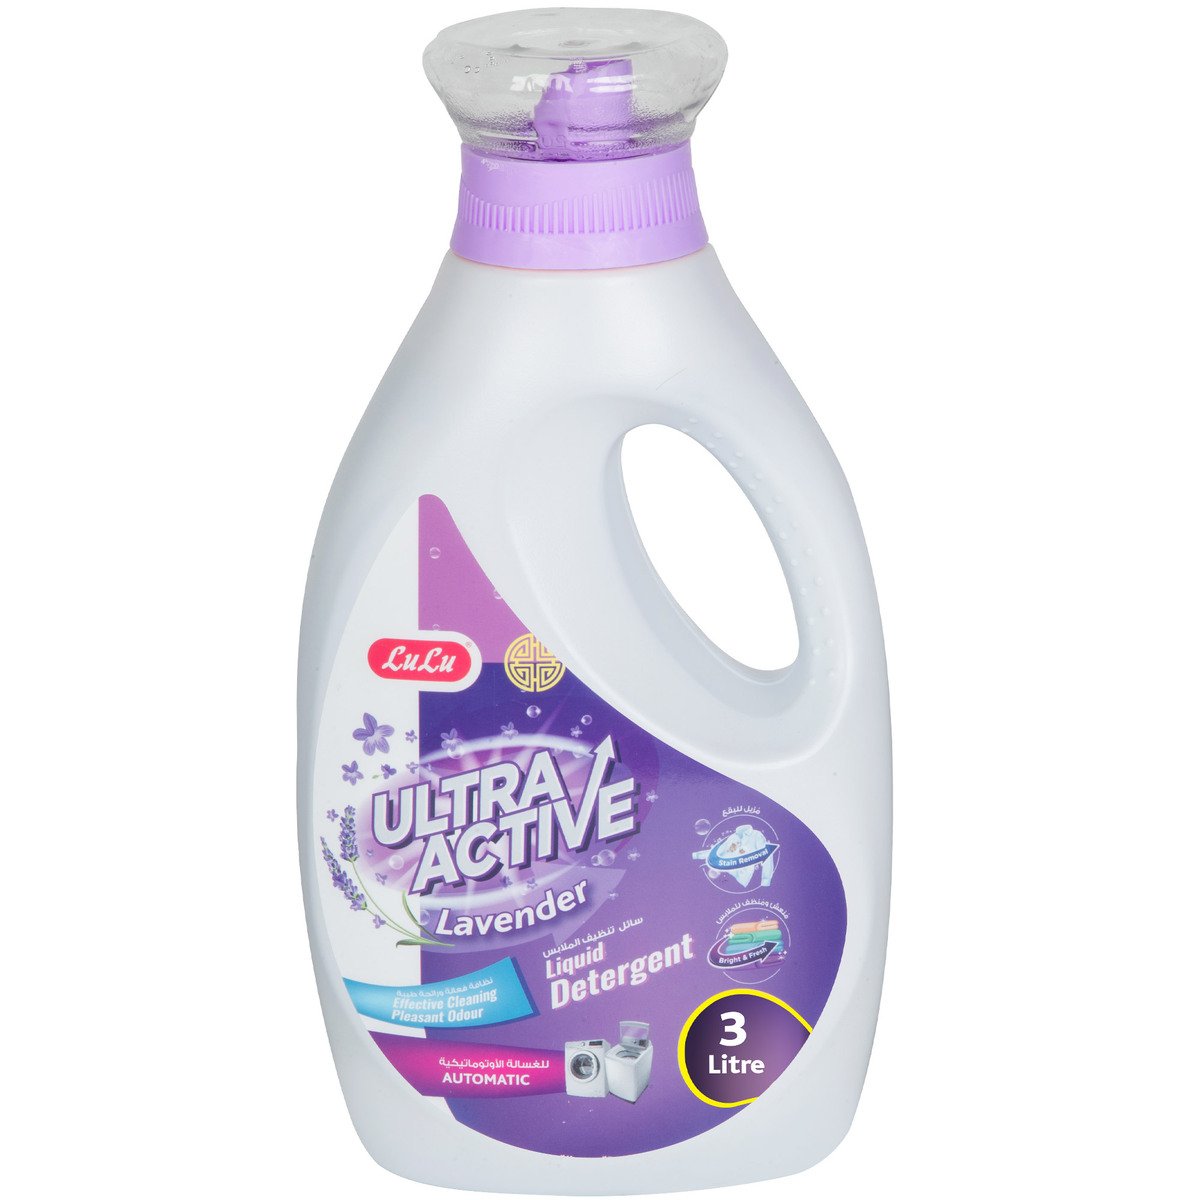 LuLu Ultra Active Lavender Liquid Detergent 3 Litres